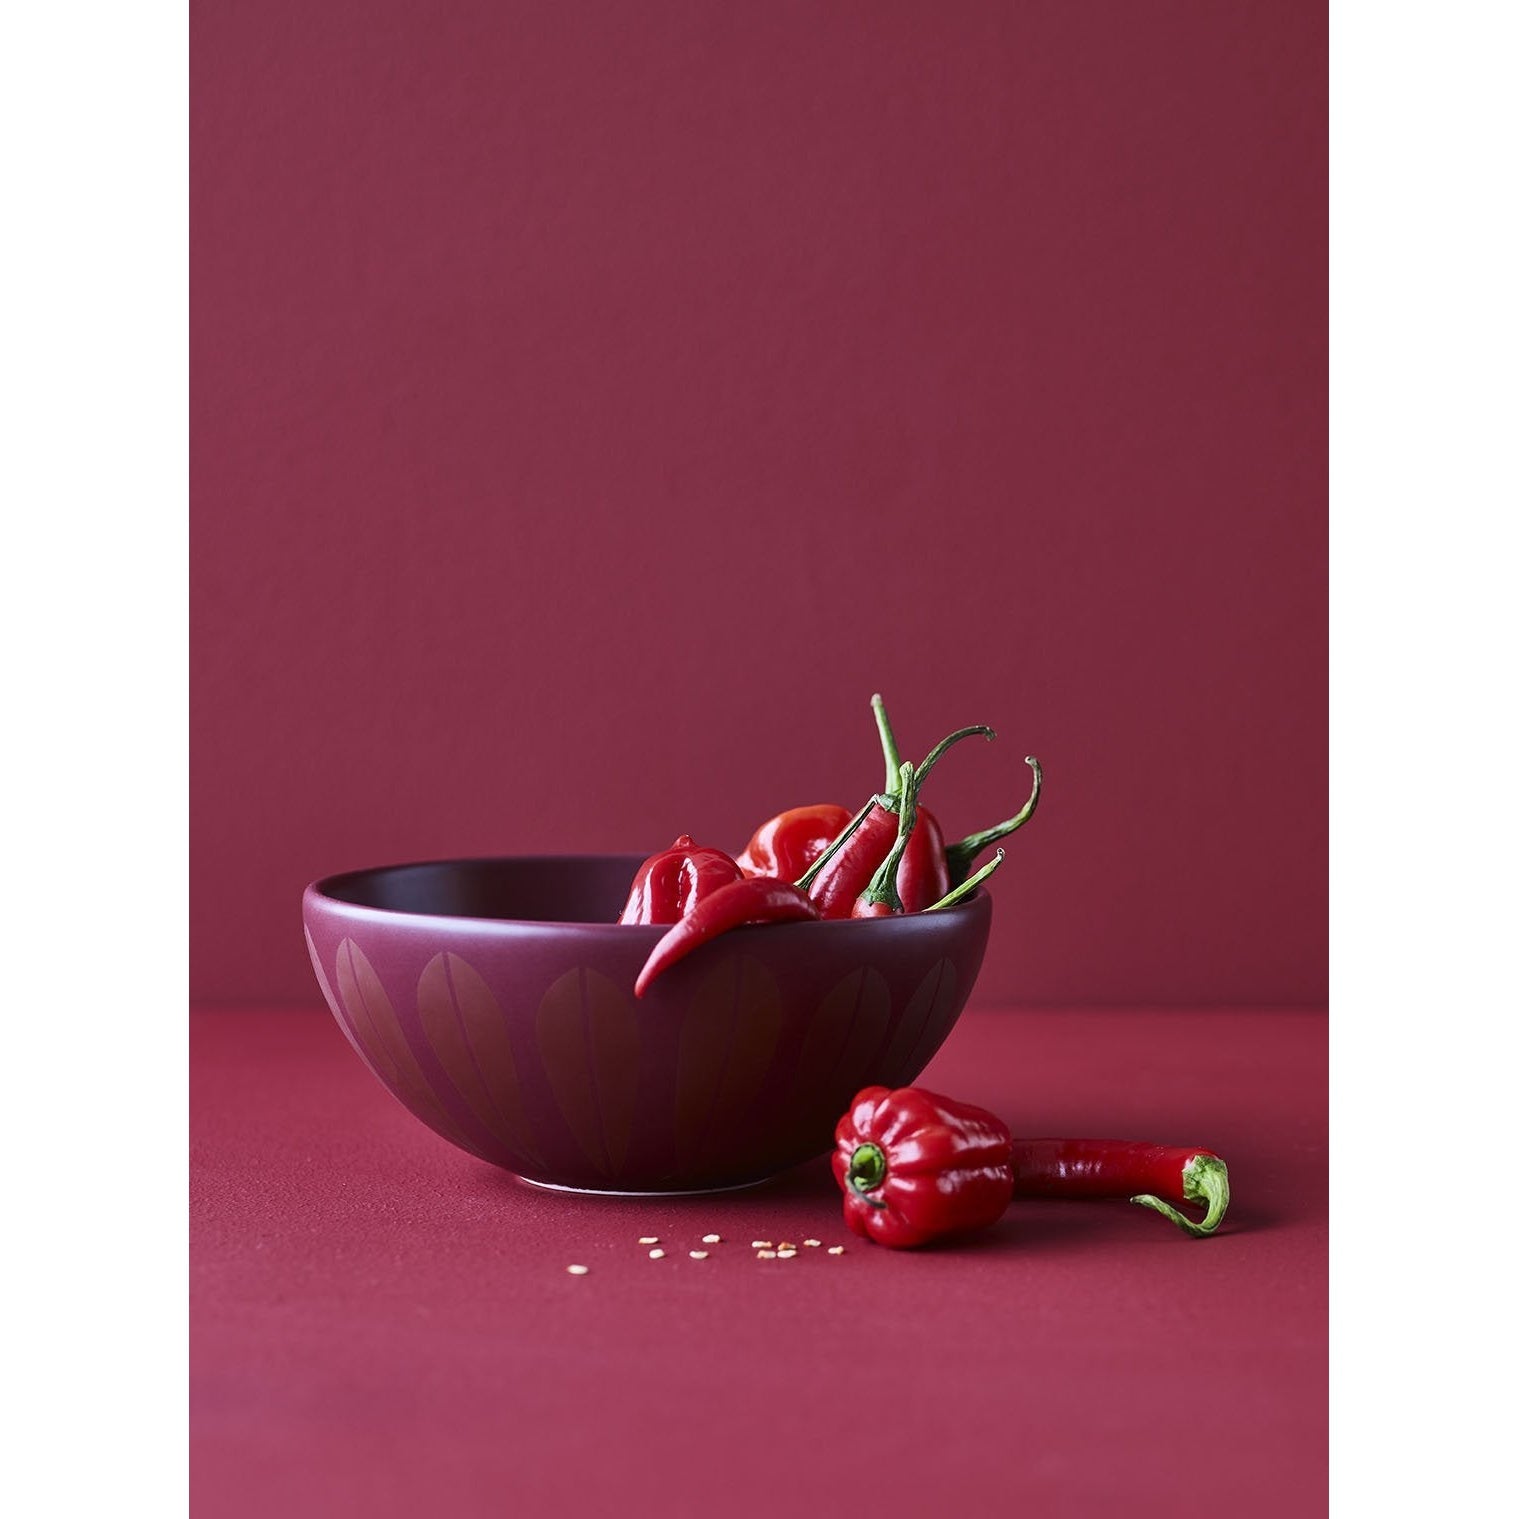 Lucie Kaas Arne Clausen Bowl scuro rosso, 18 cm